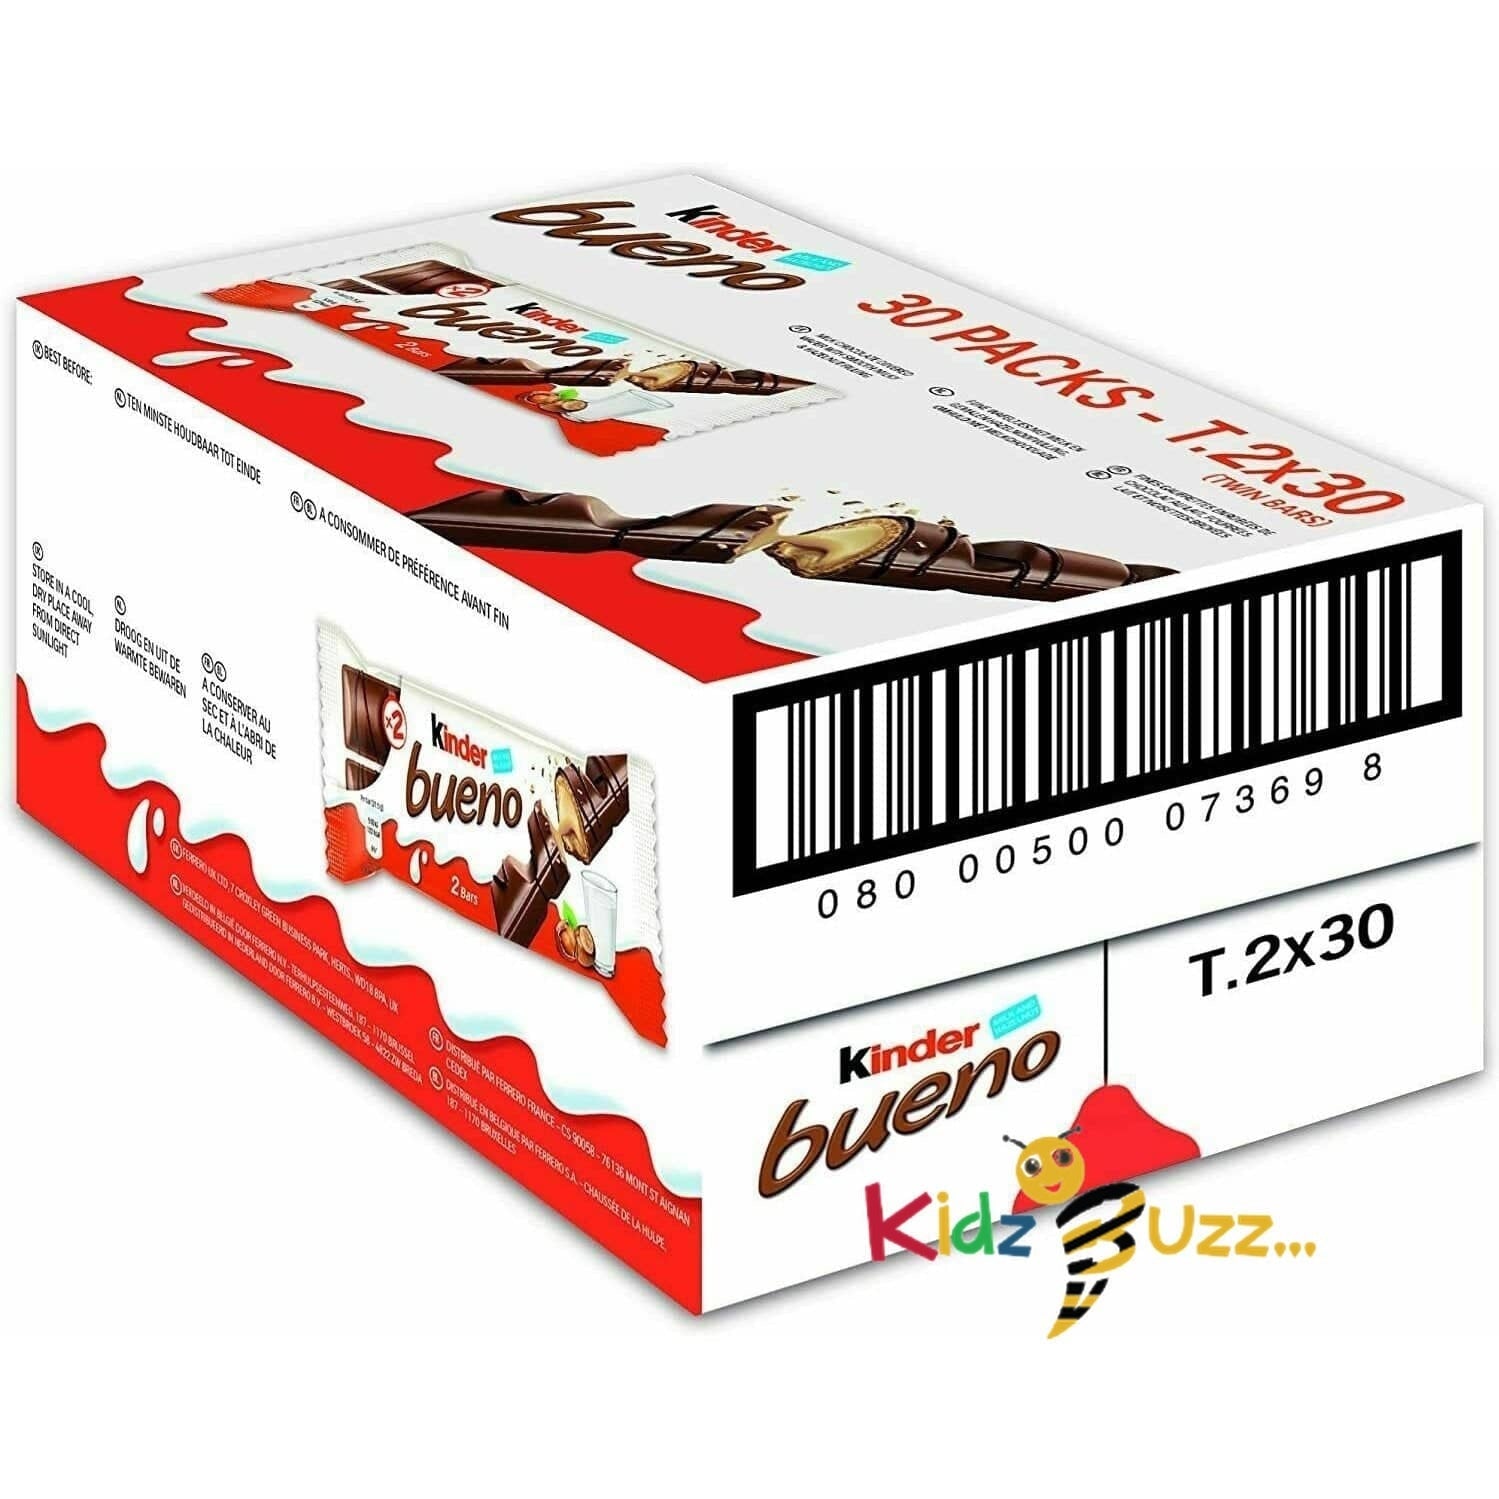 Kinder Bueno Chocolate Bars, 44 g Pack of 30